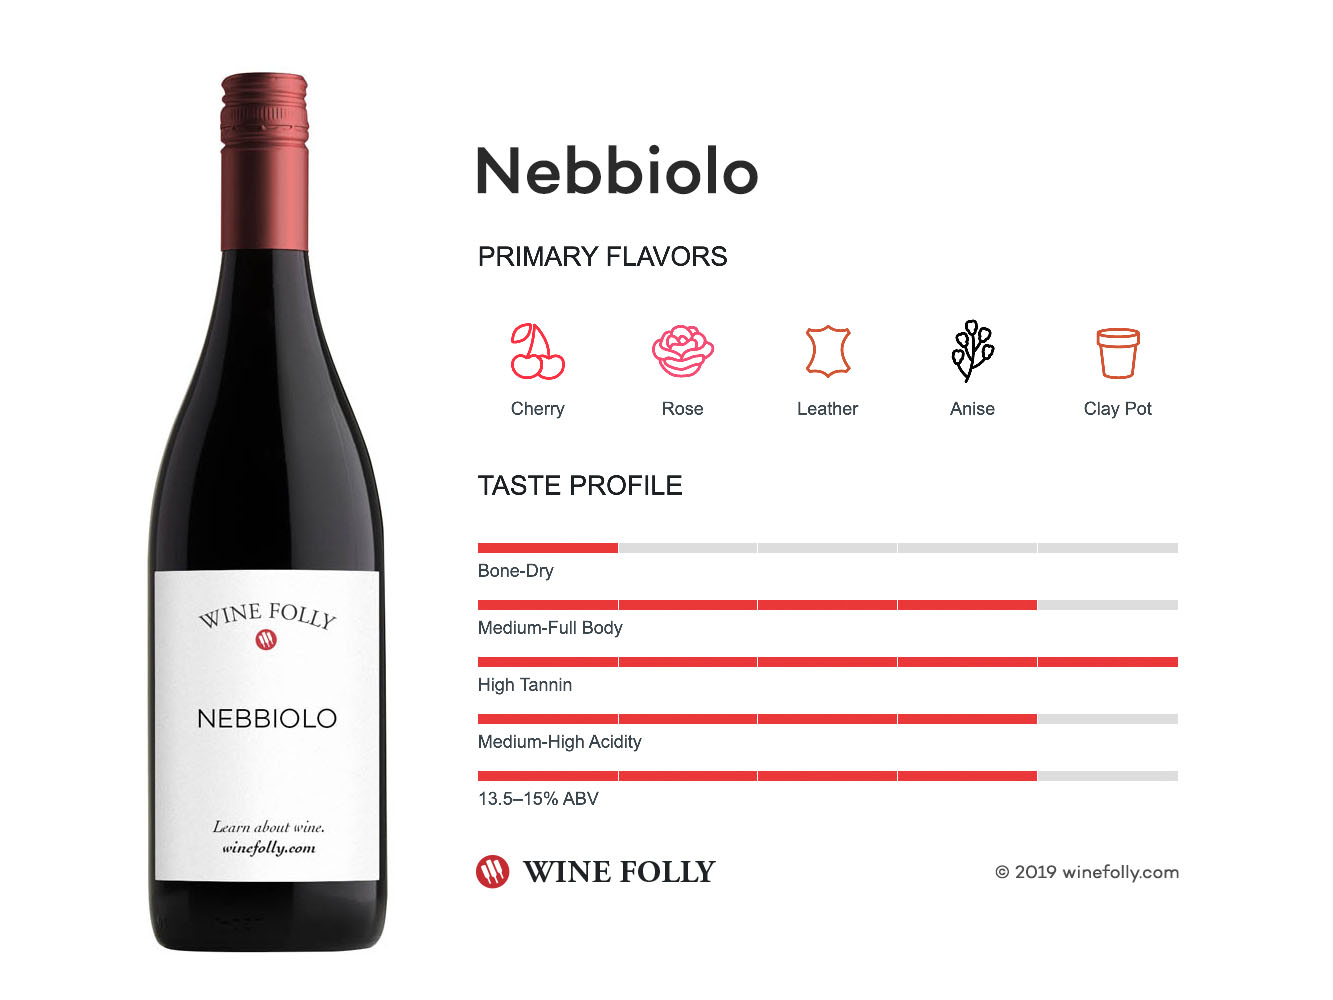 Nebbiolo wine taste profile - infographic by Wine Folly